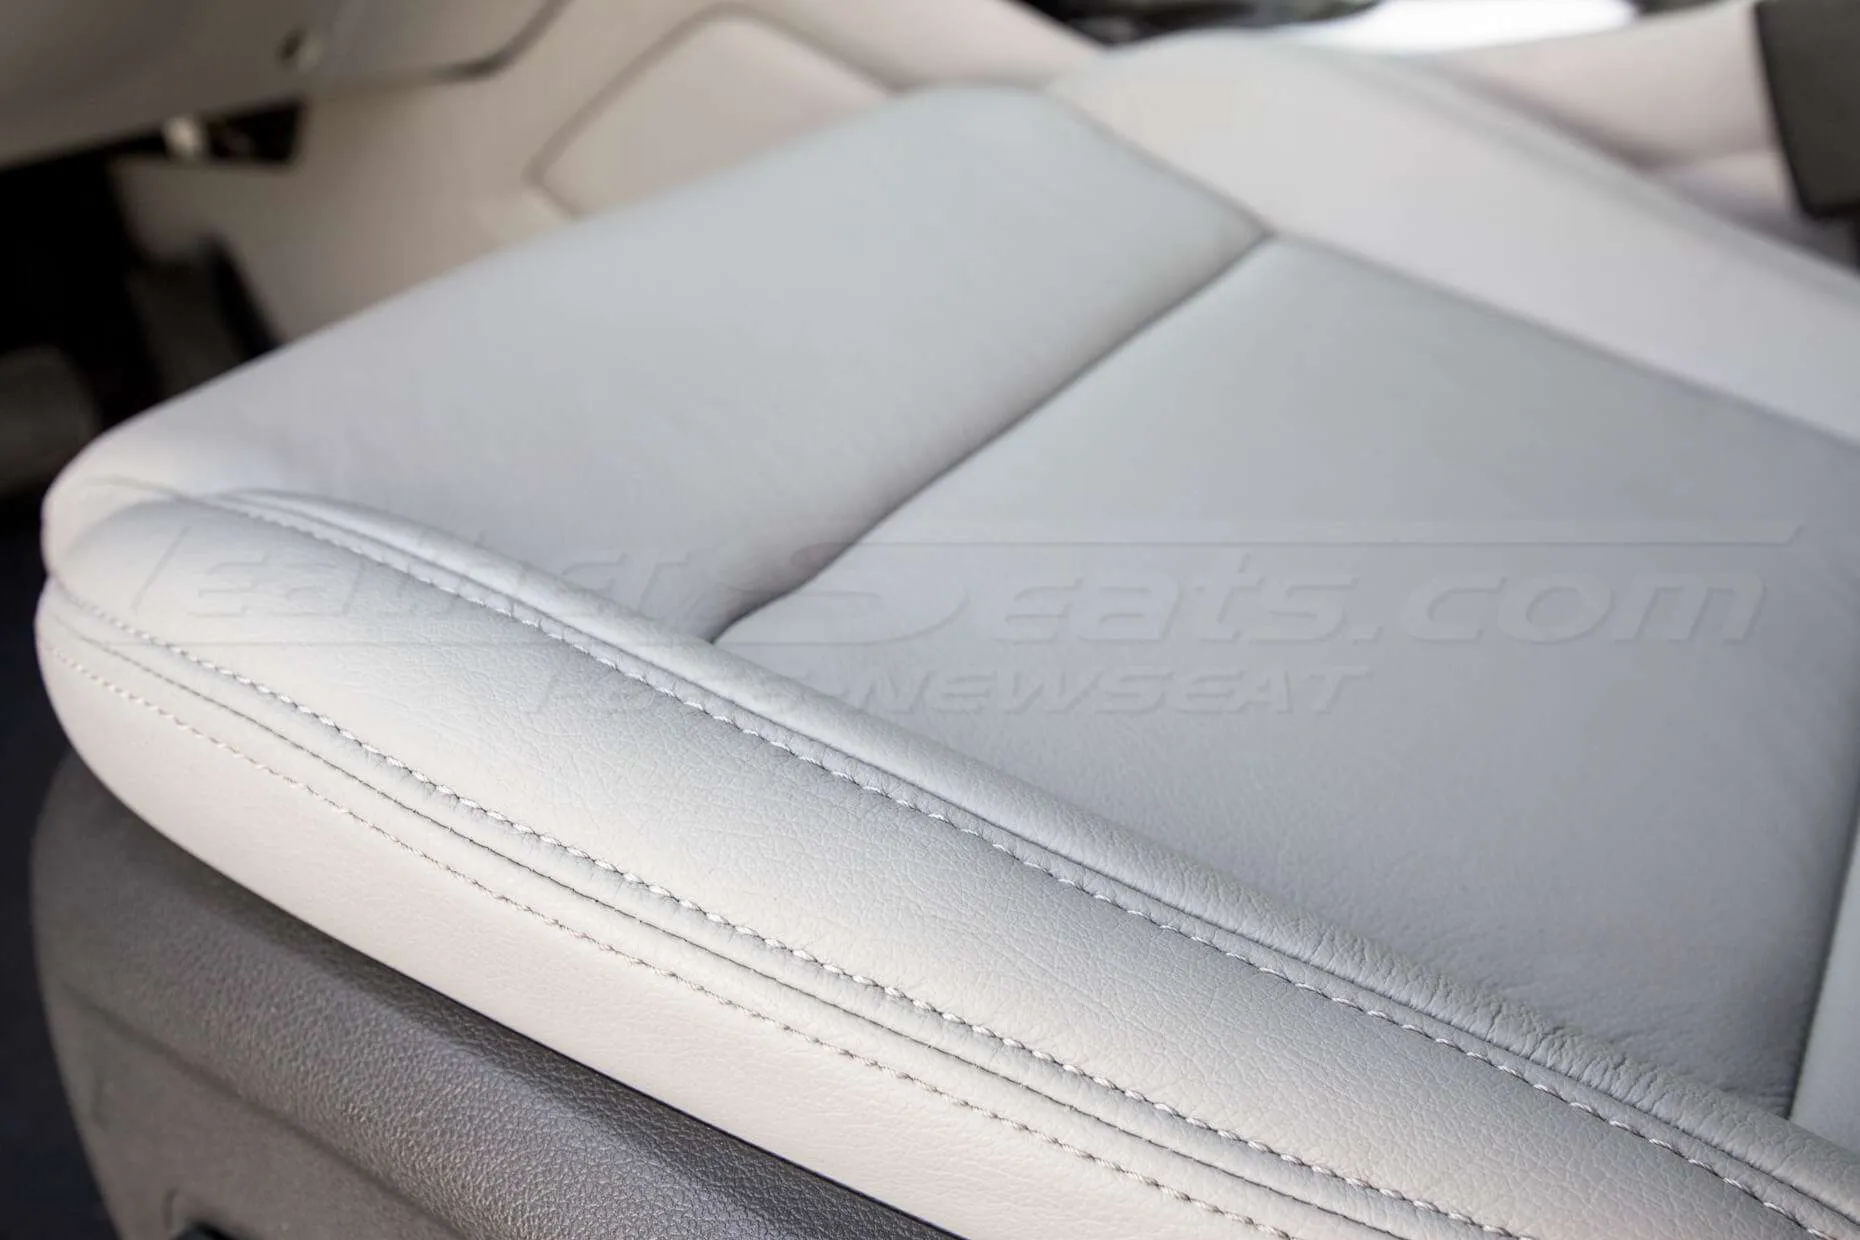 Honda Tucson Installed Leather Seats - Ash - Seat cushion side double-stitching